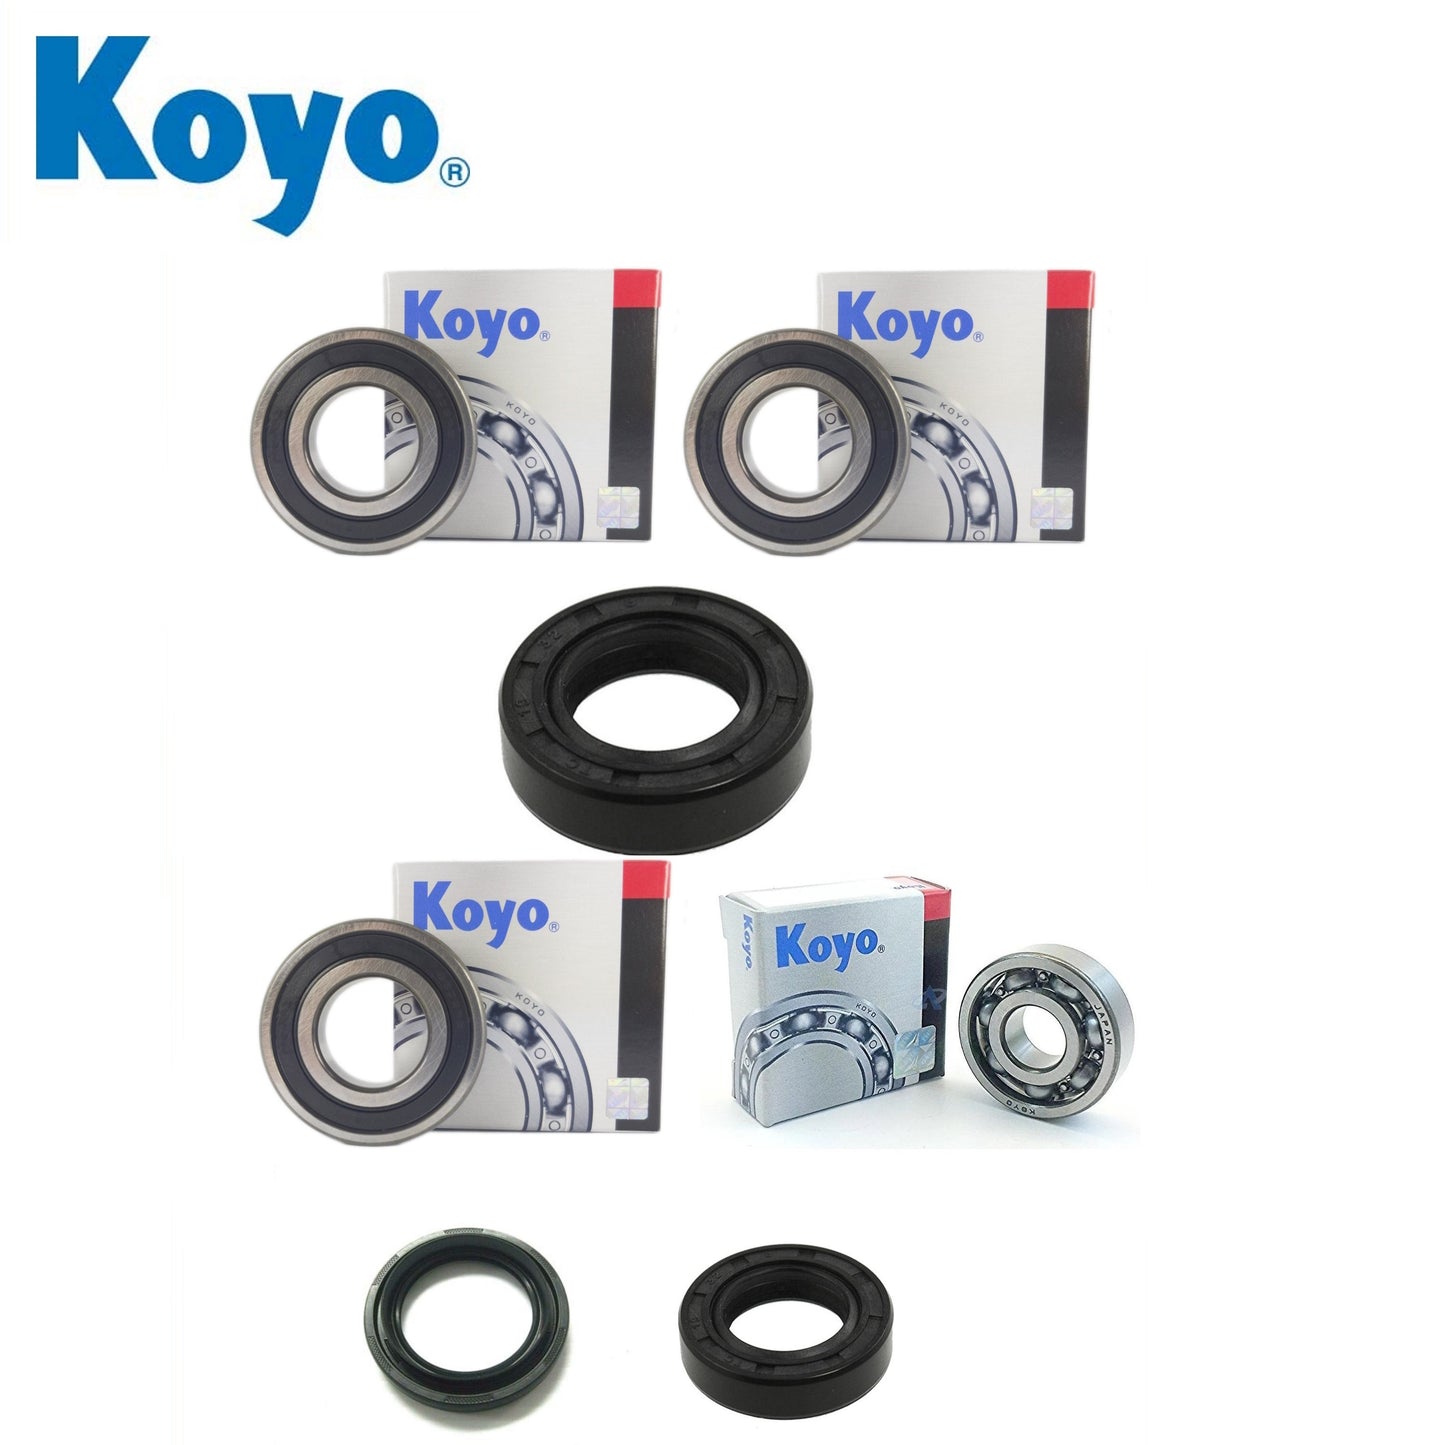 Yamaha YFM250 2000 4XE8 030 D front and rear wheel bearing kit with Koyo bearings